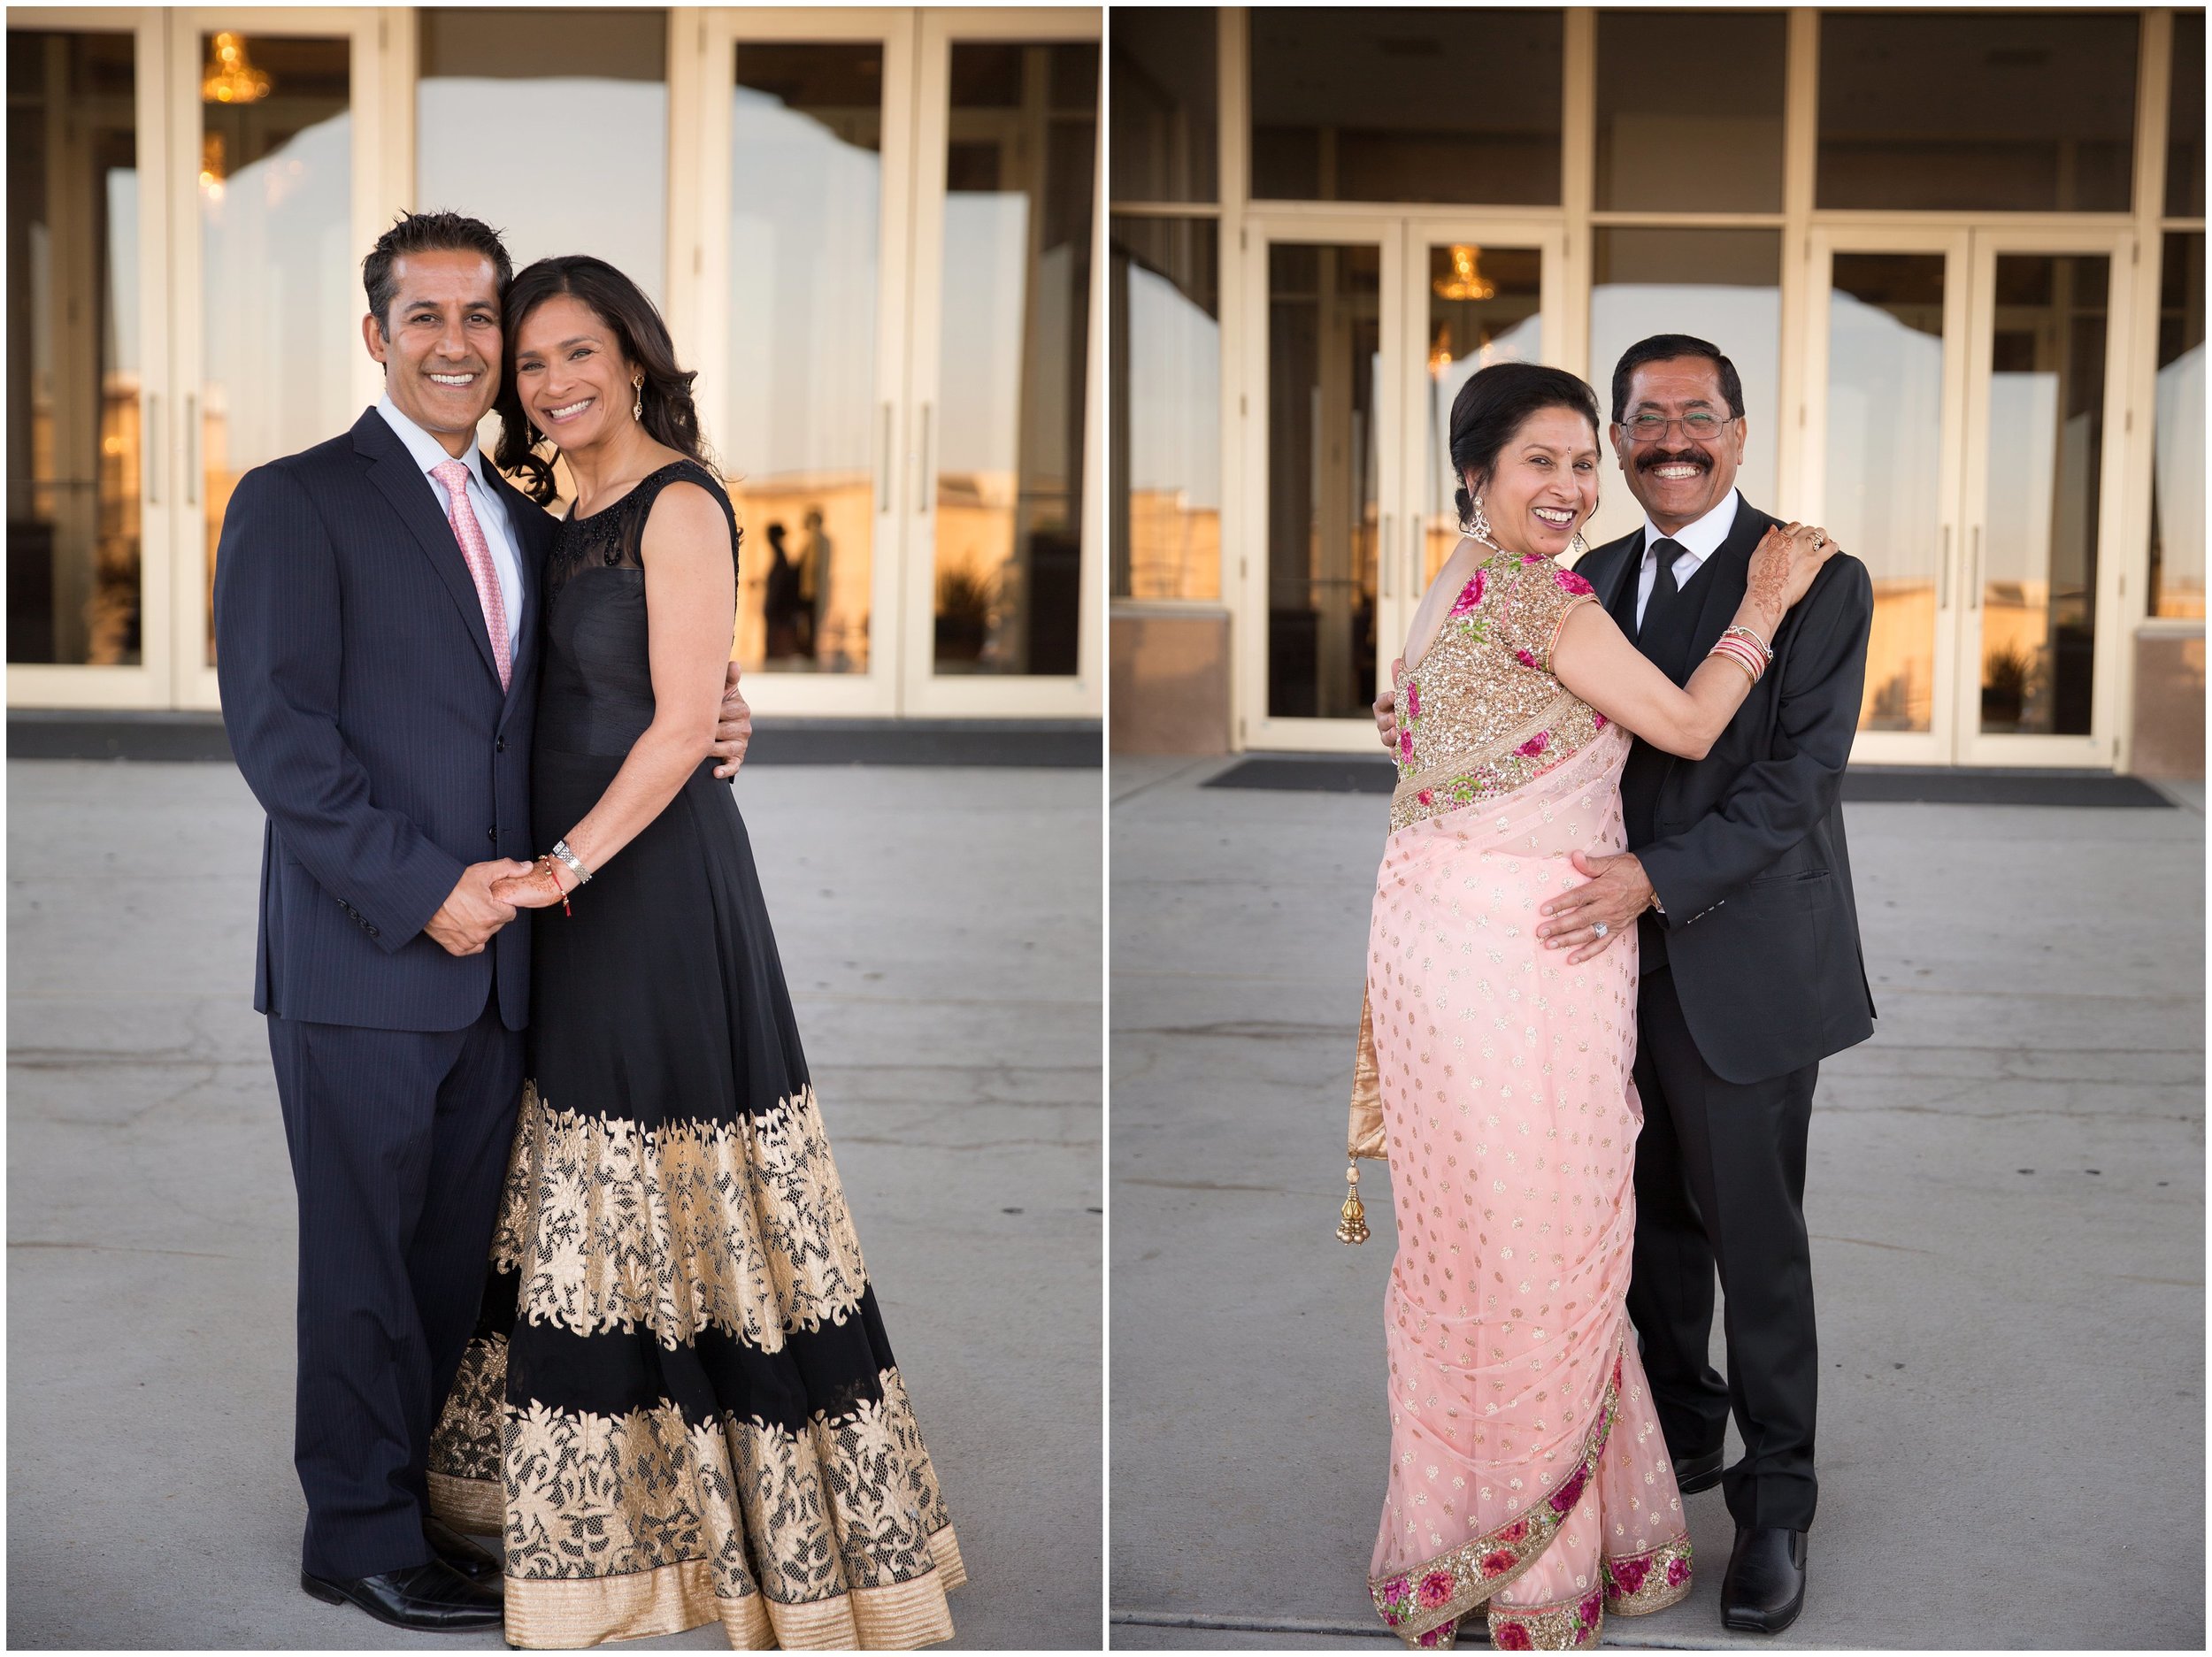 Le Cape Weddings - South Asian Wedding in Illinois - Tanvi and Anshul -0661_LuxuryDestinationPhotographer.jpg